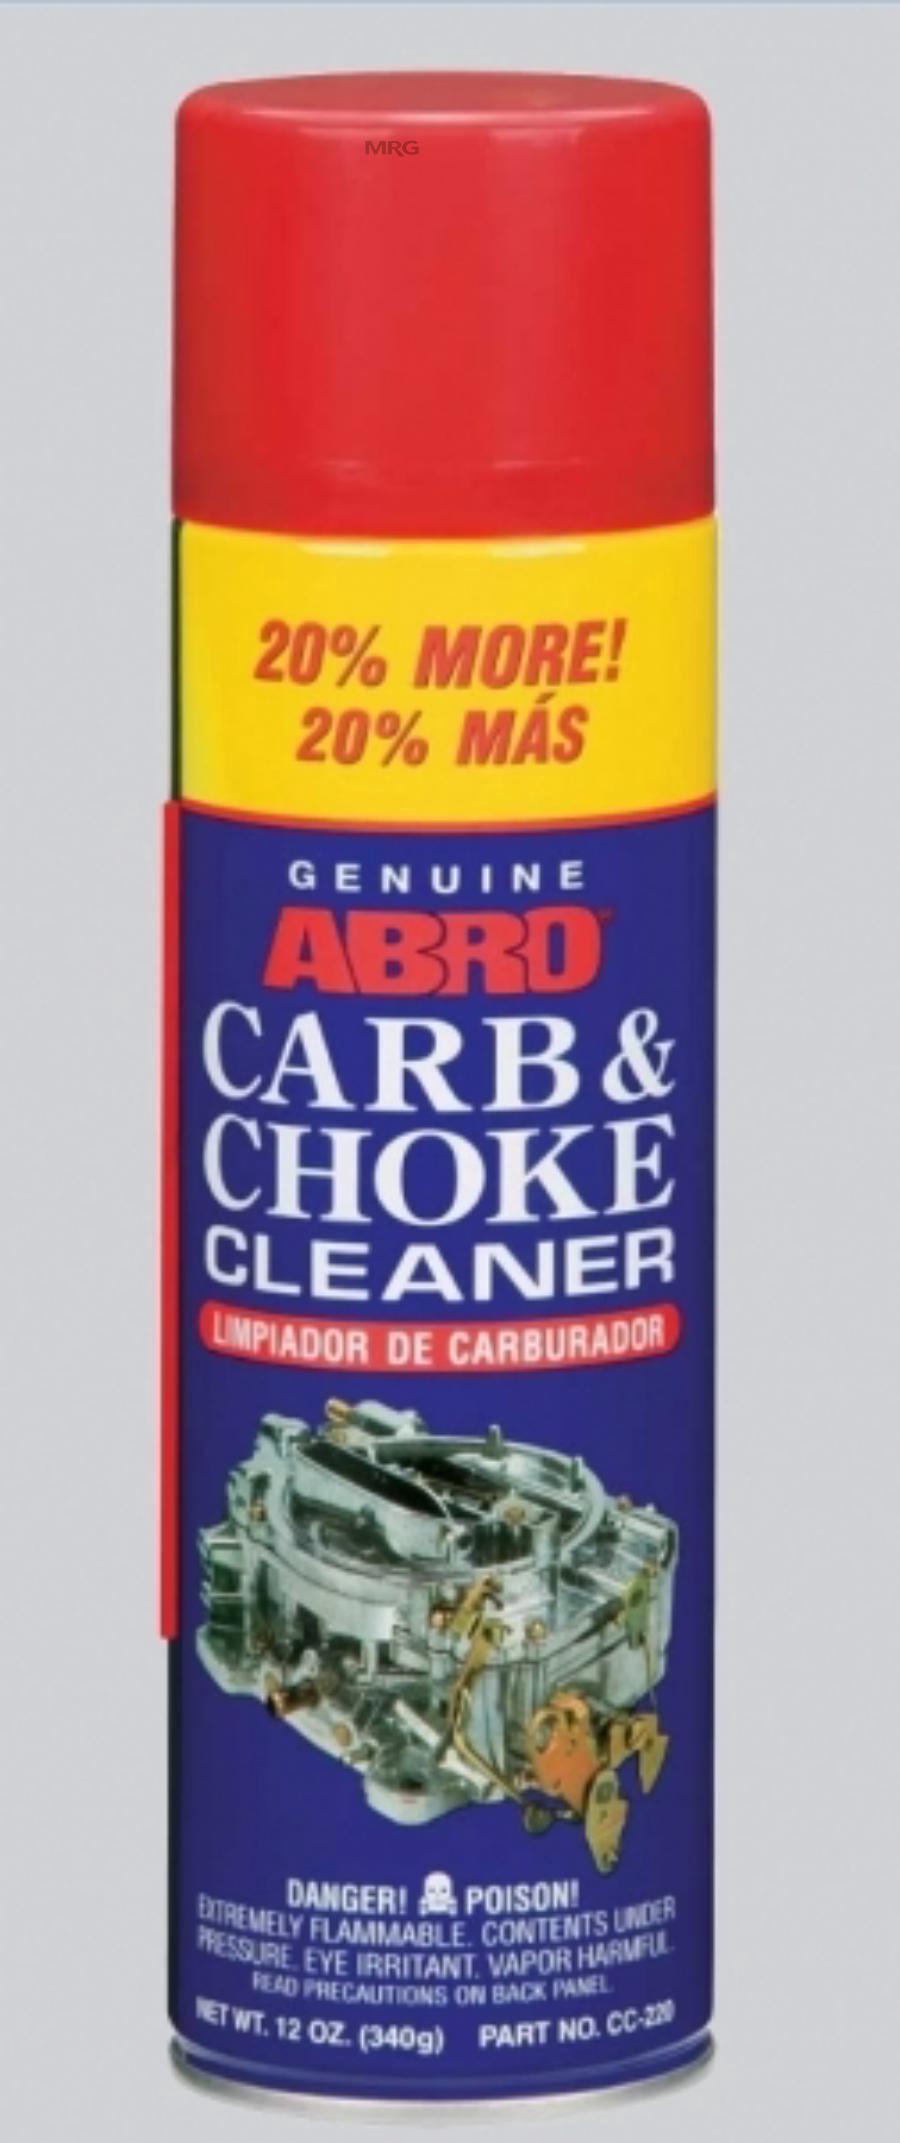 Сс 220. Abro cc220r. Очиститель карбюратора СС 220 abro. Abro очиститель карбюратора спрей+20% сс220 340гр.. Abro Carb Choke Cleaner.